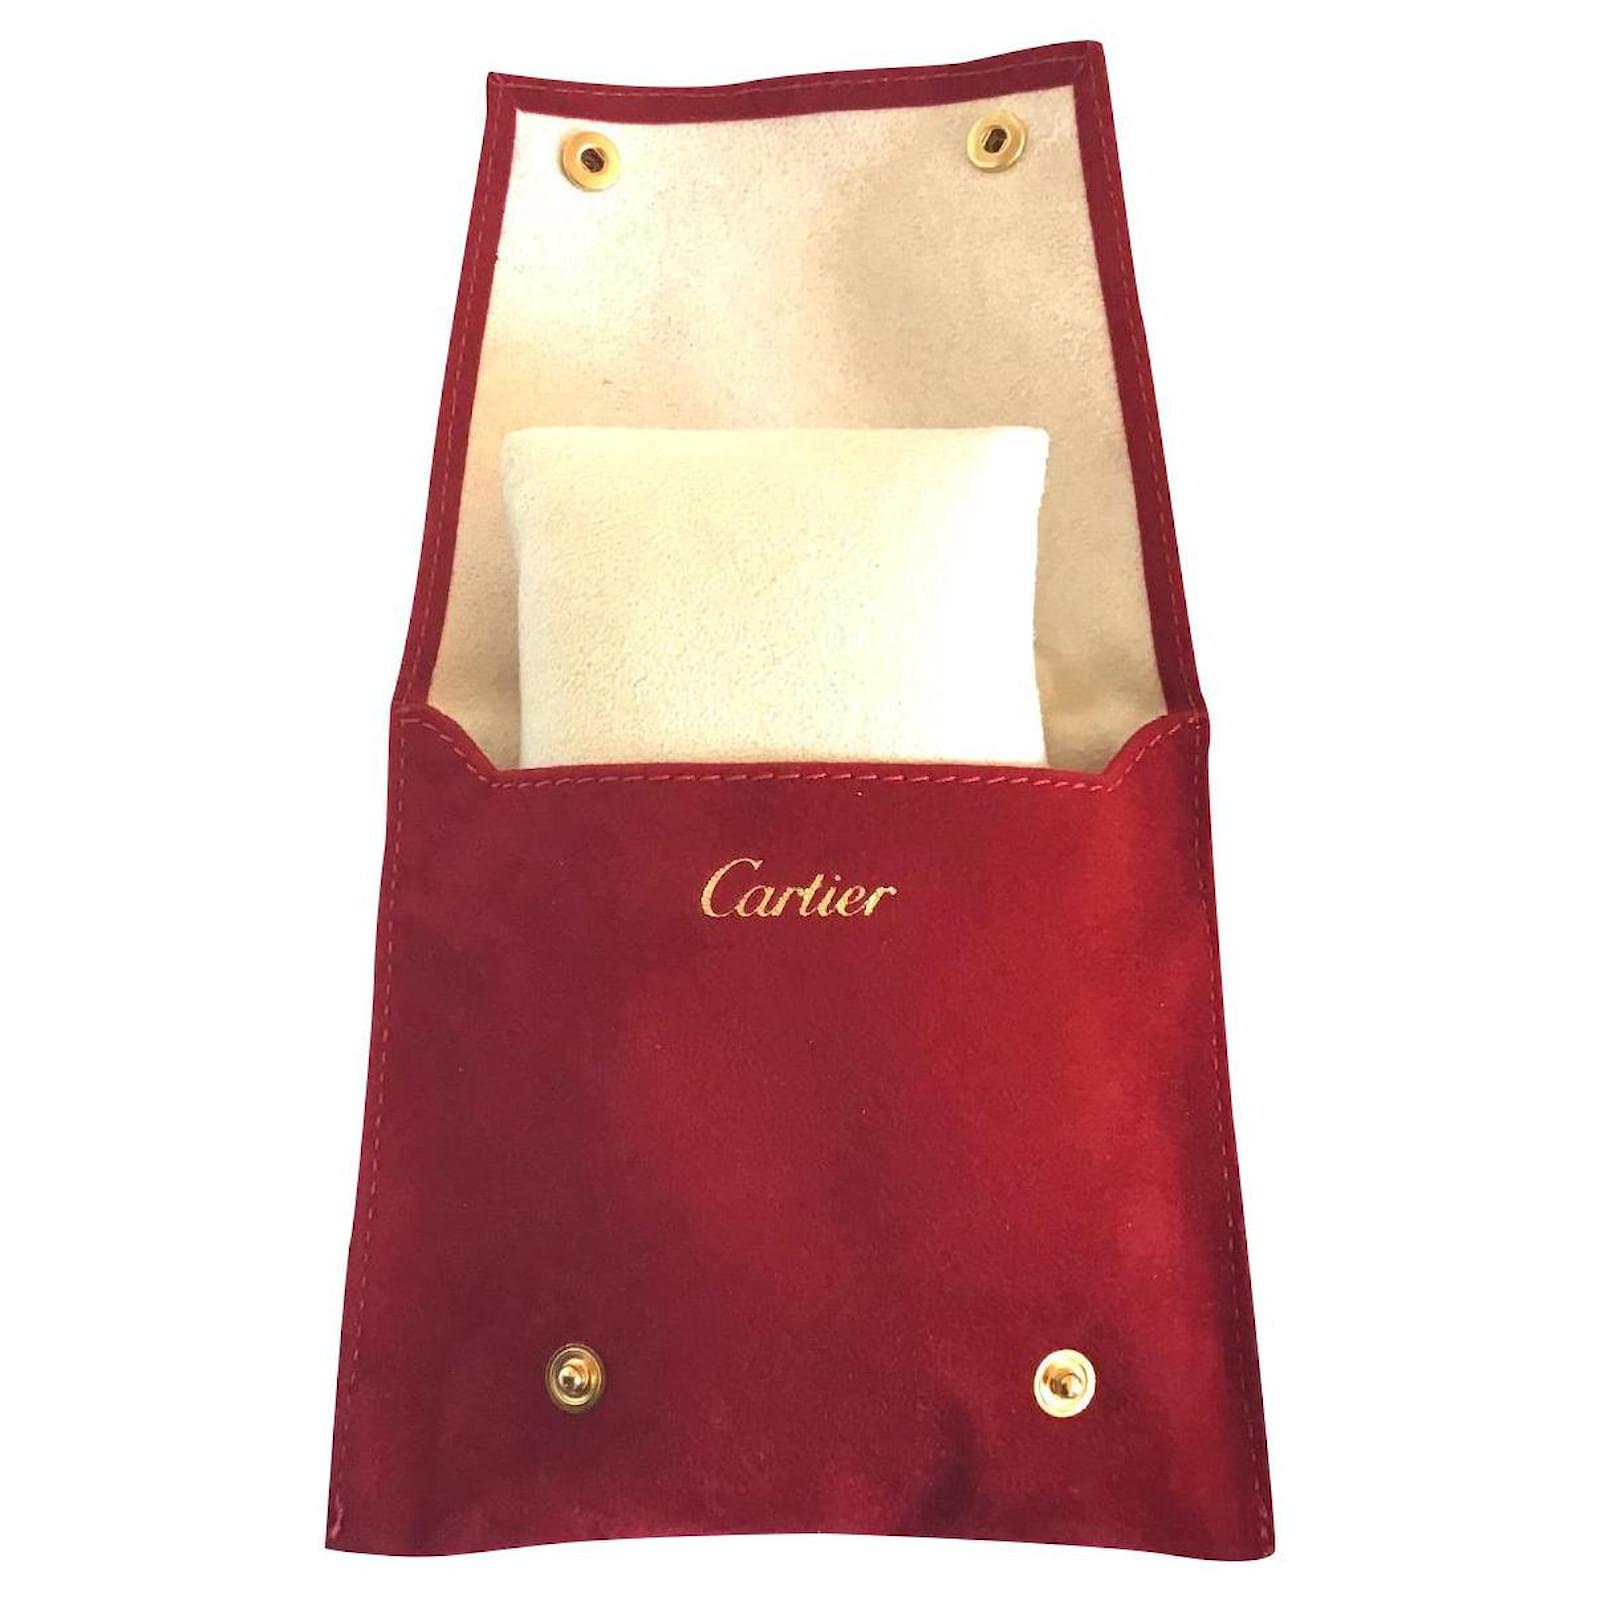 CROG000668 - Diabolo de Cartier jewellery travel case - Red calfskin -  Cartier